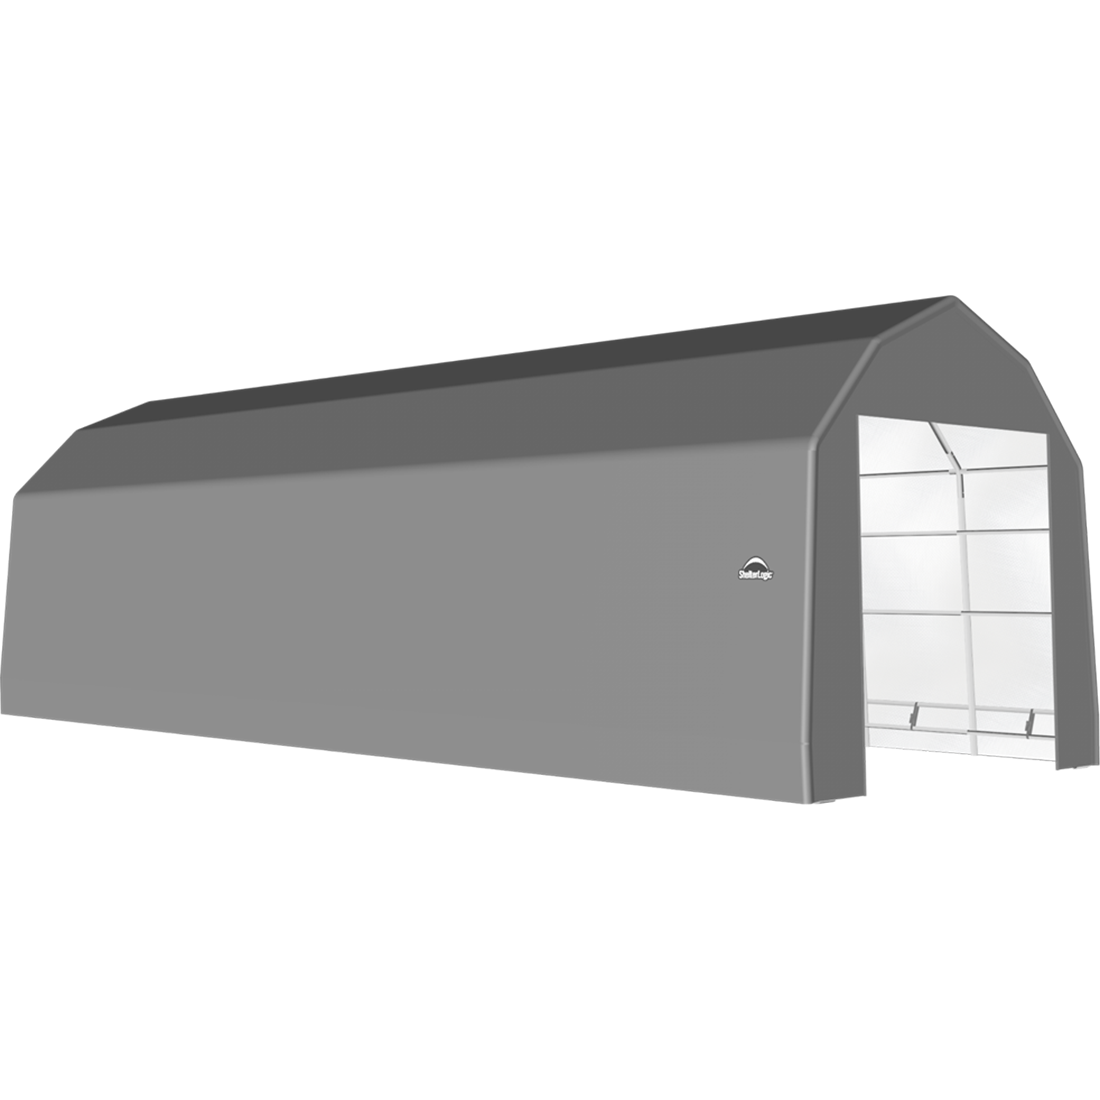 ShelterTech SP Series Barn Shelter, 15 ft. x 32 ft. x 14 ft. Heavy Duty PVC 14.5 oz. Gray